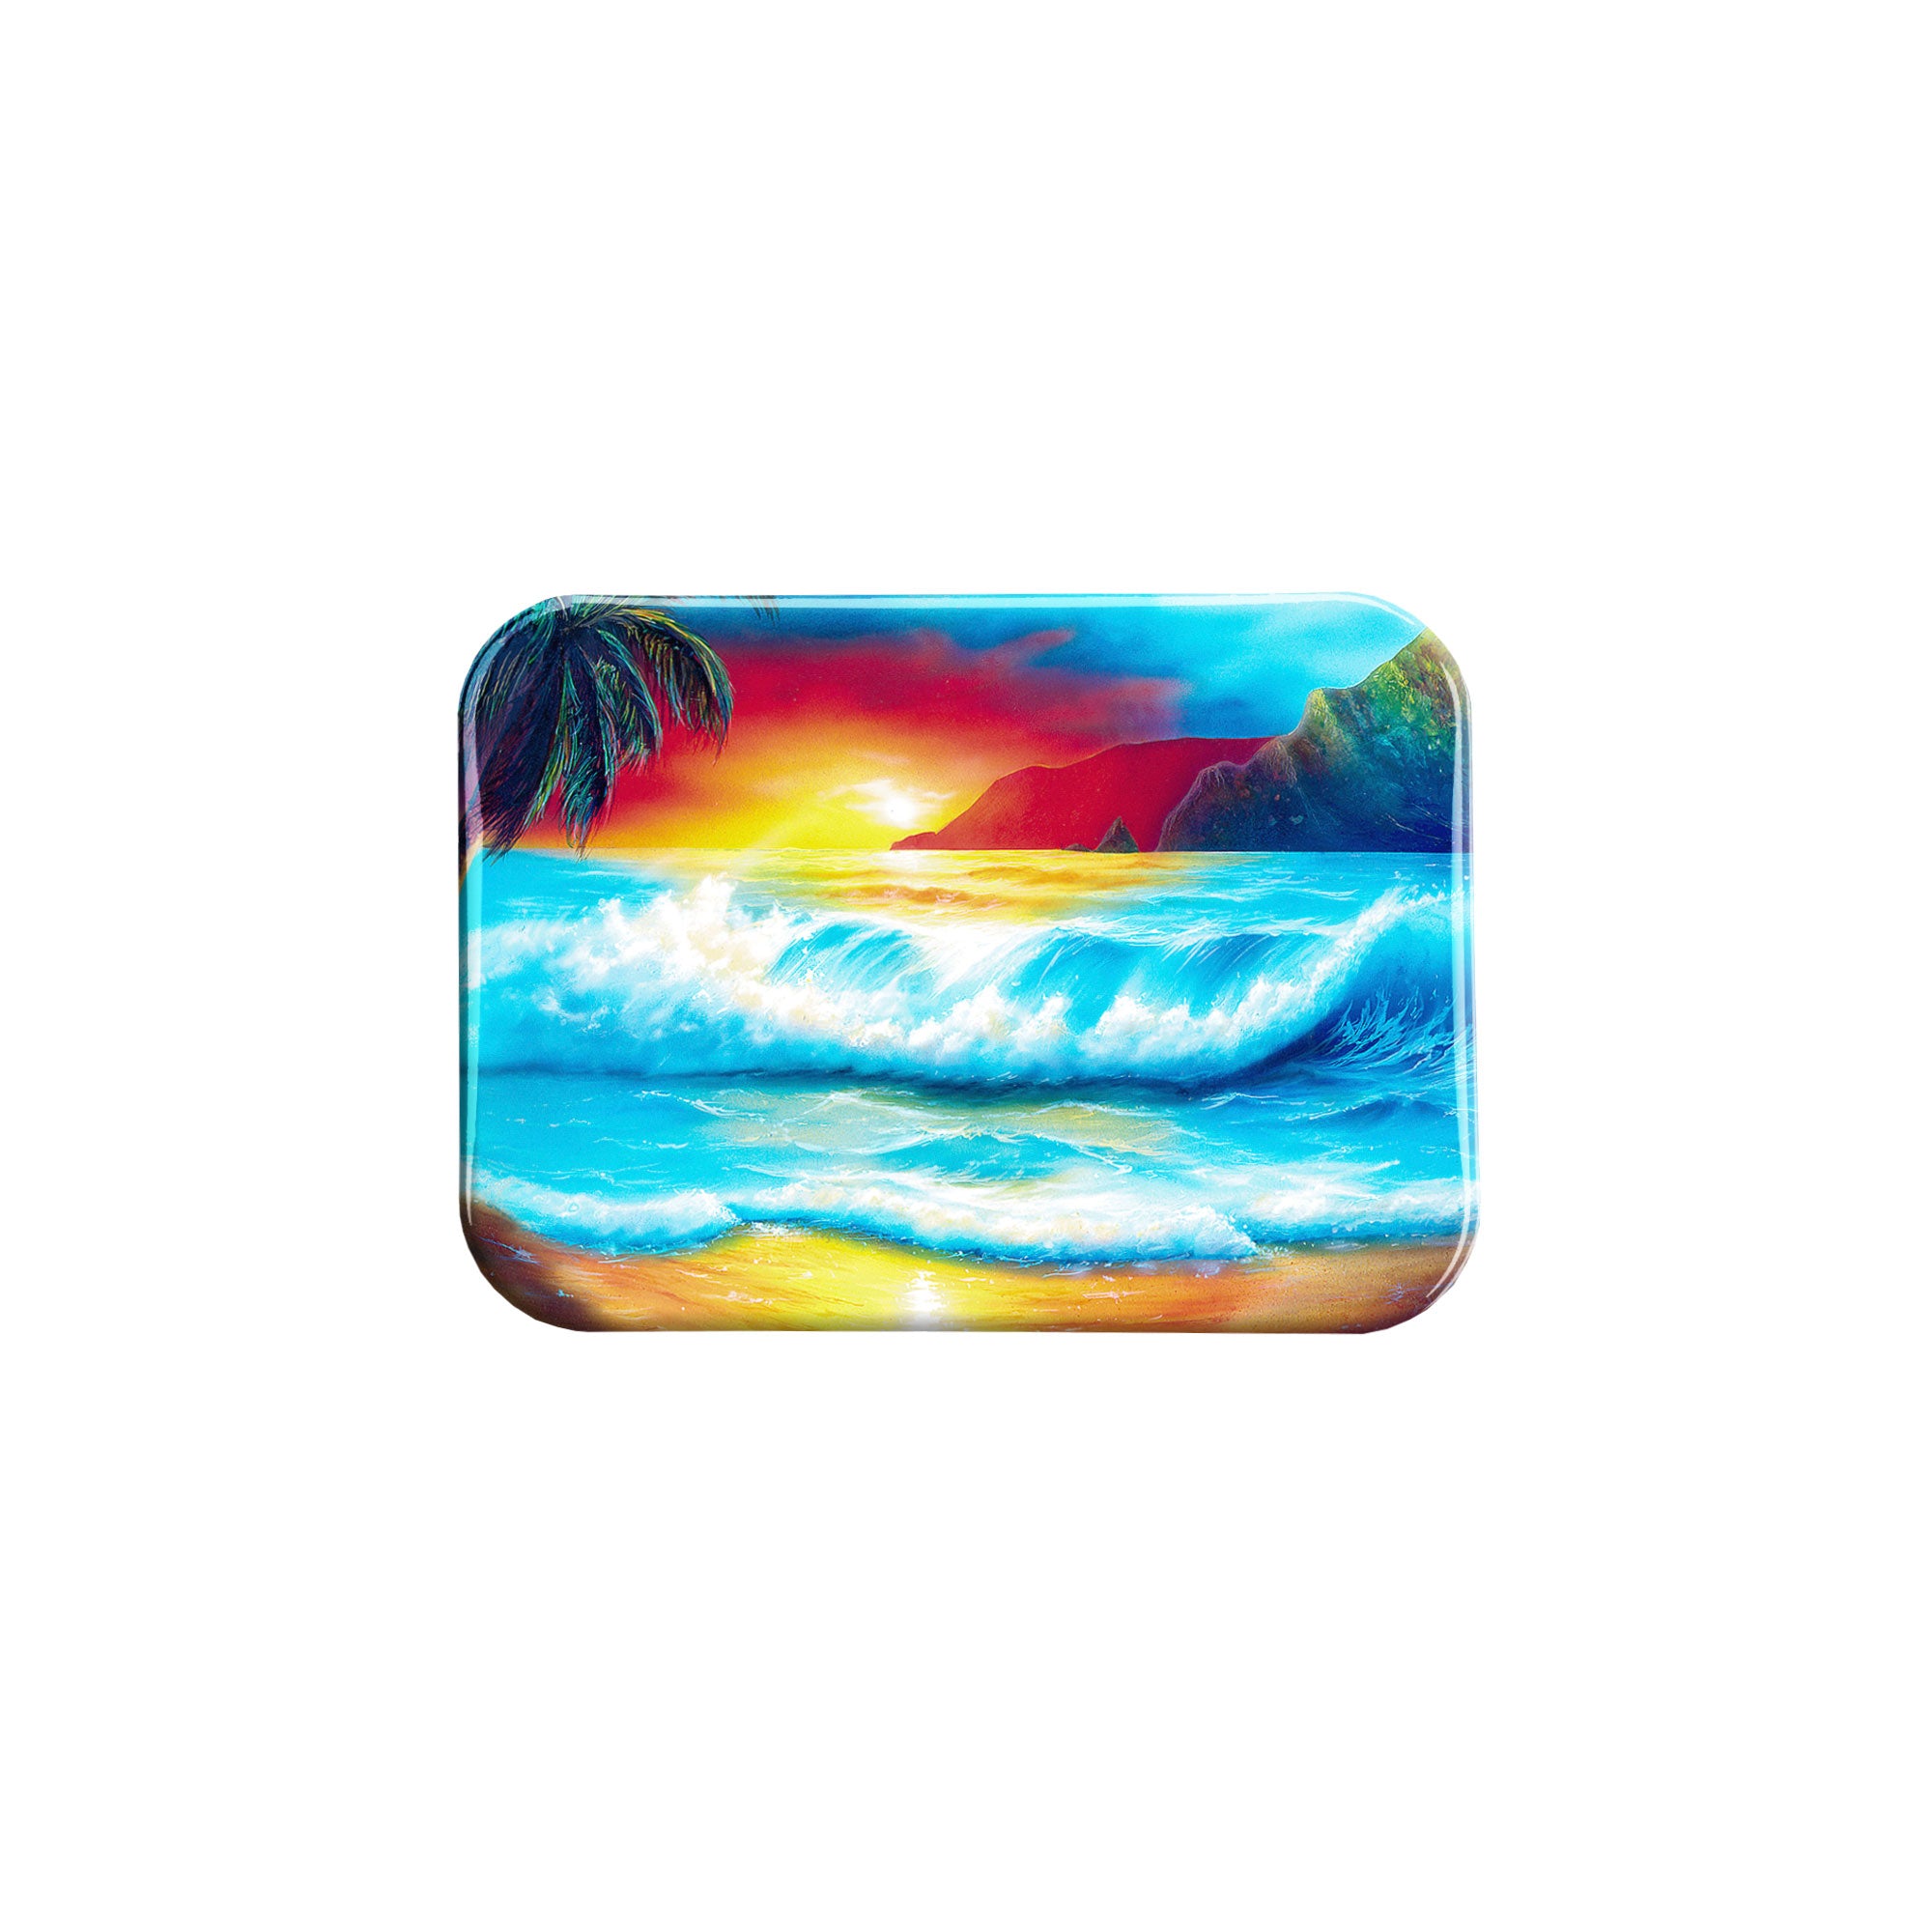 "Hawaii Sunset" - 2.5" X 3.5" Rectangle Fridge Magnets